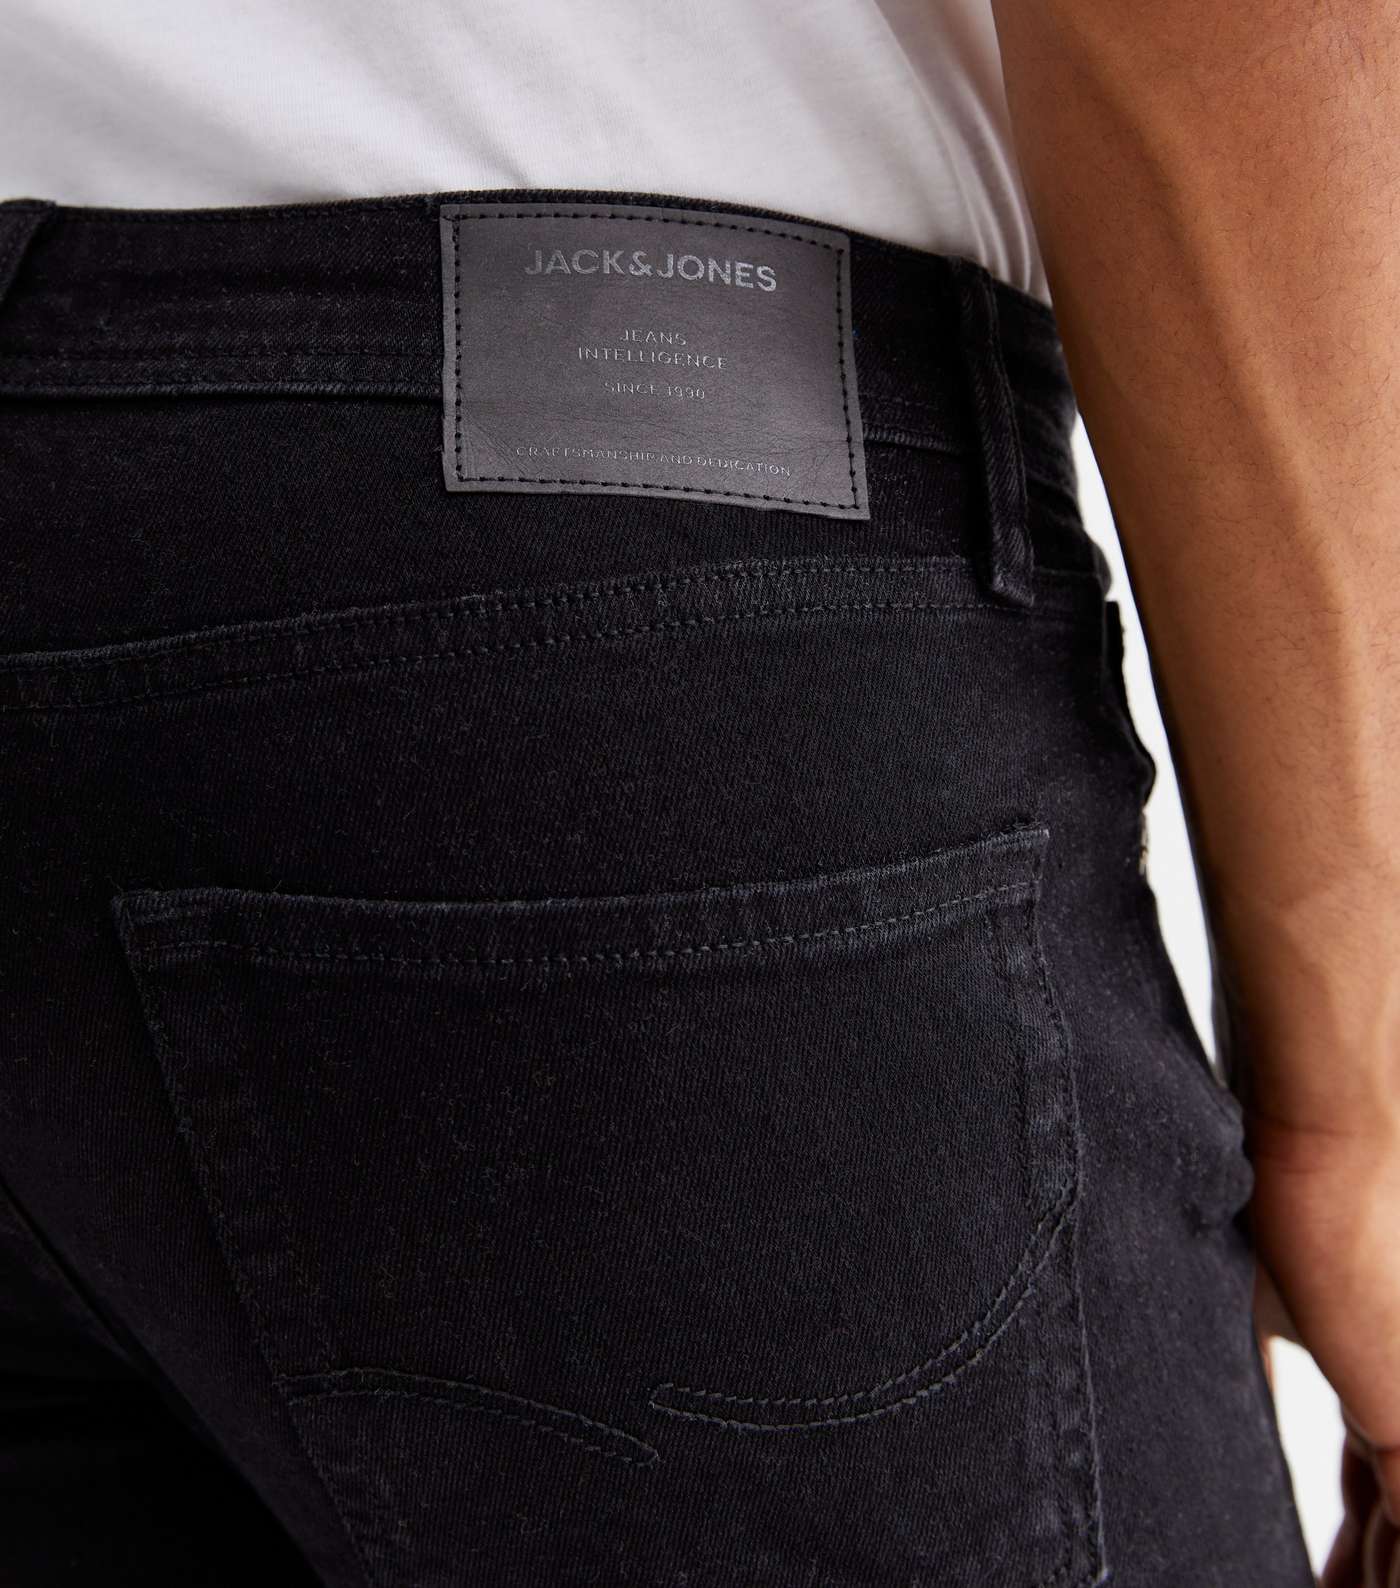 Jack & Jones Black Slim Fit Jeans Image 3